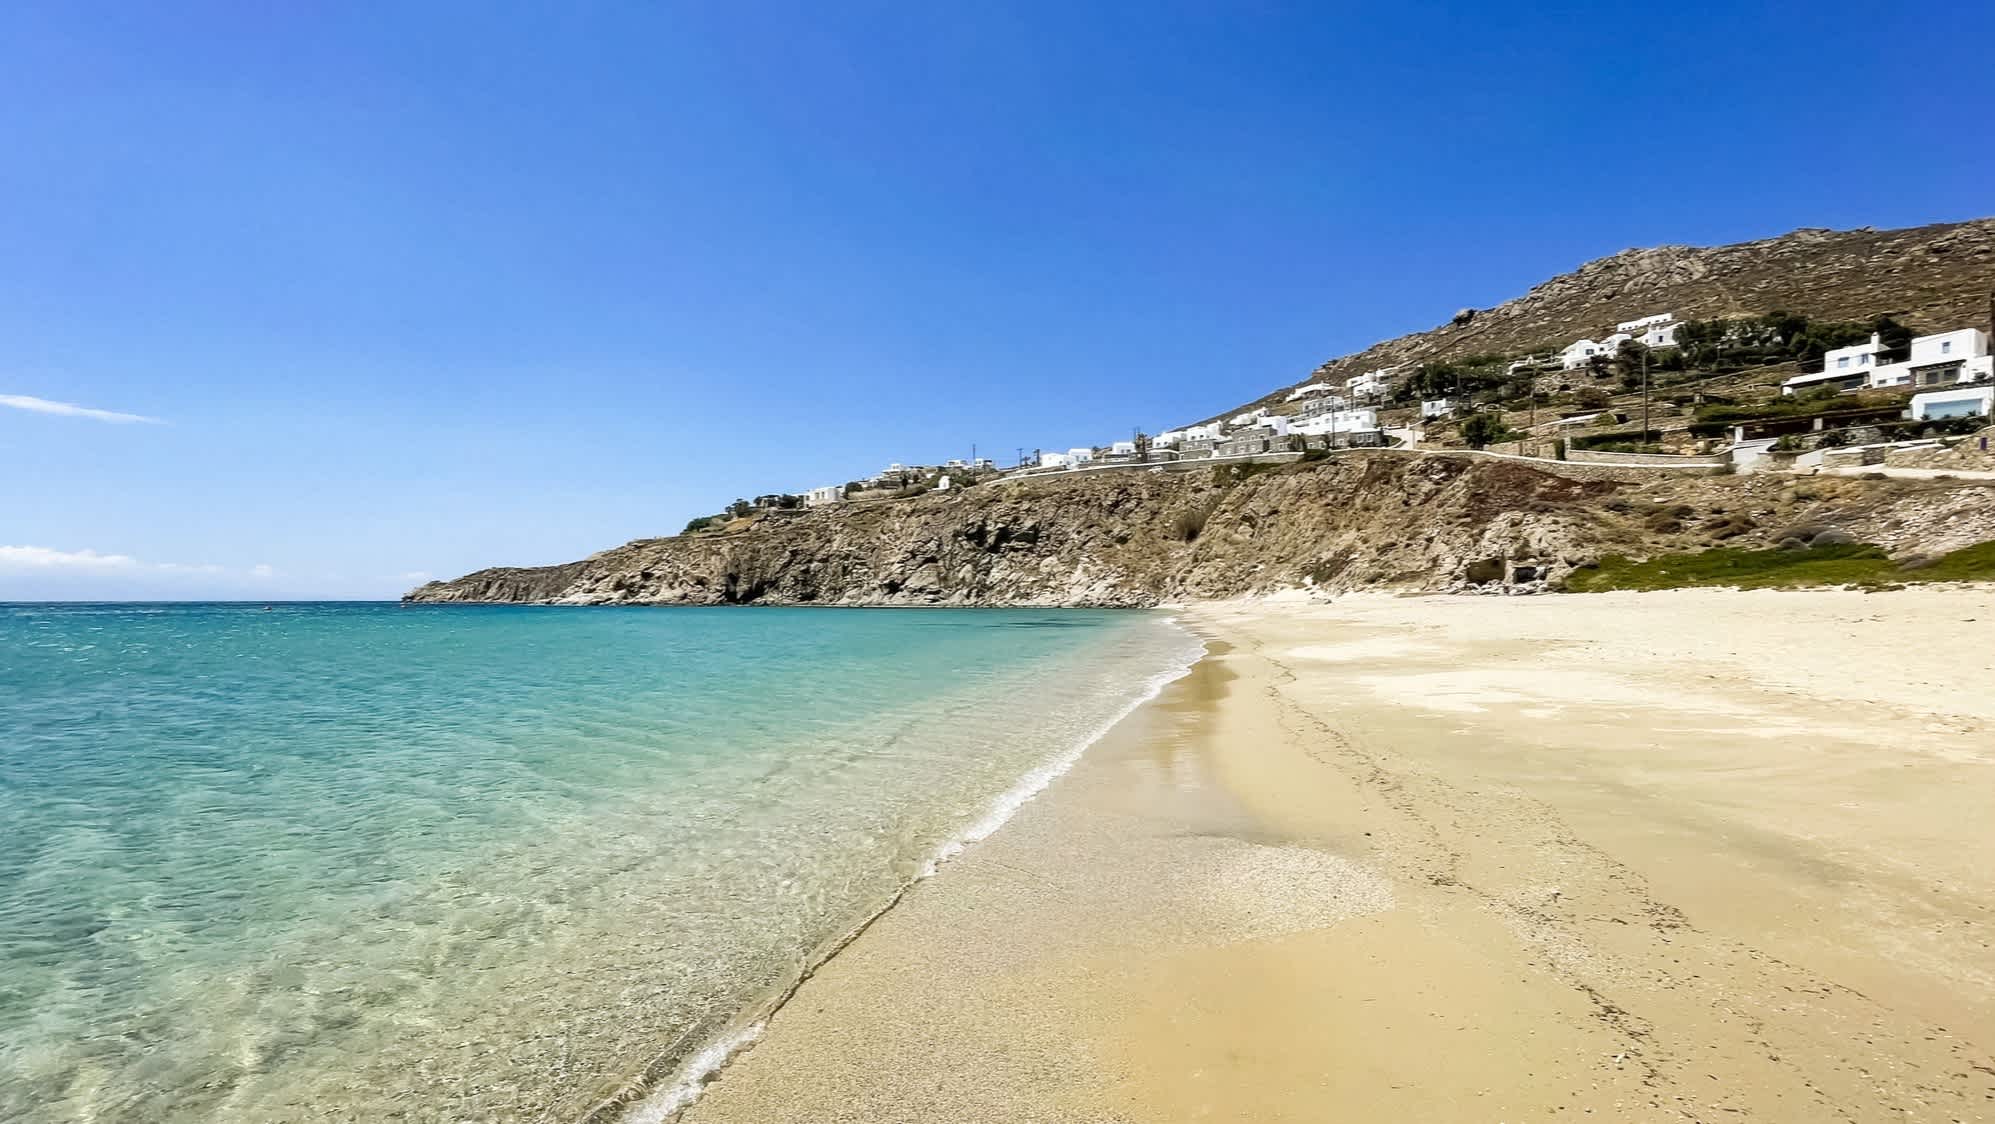 Blick auf den Kalo Livadi Strand, Insel Mykonos, Griechenland.